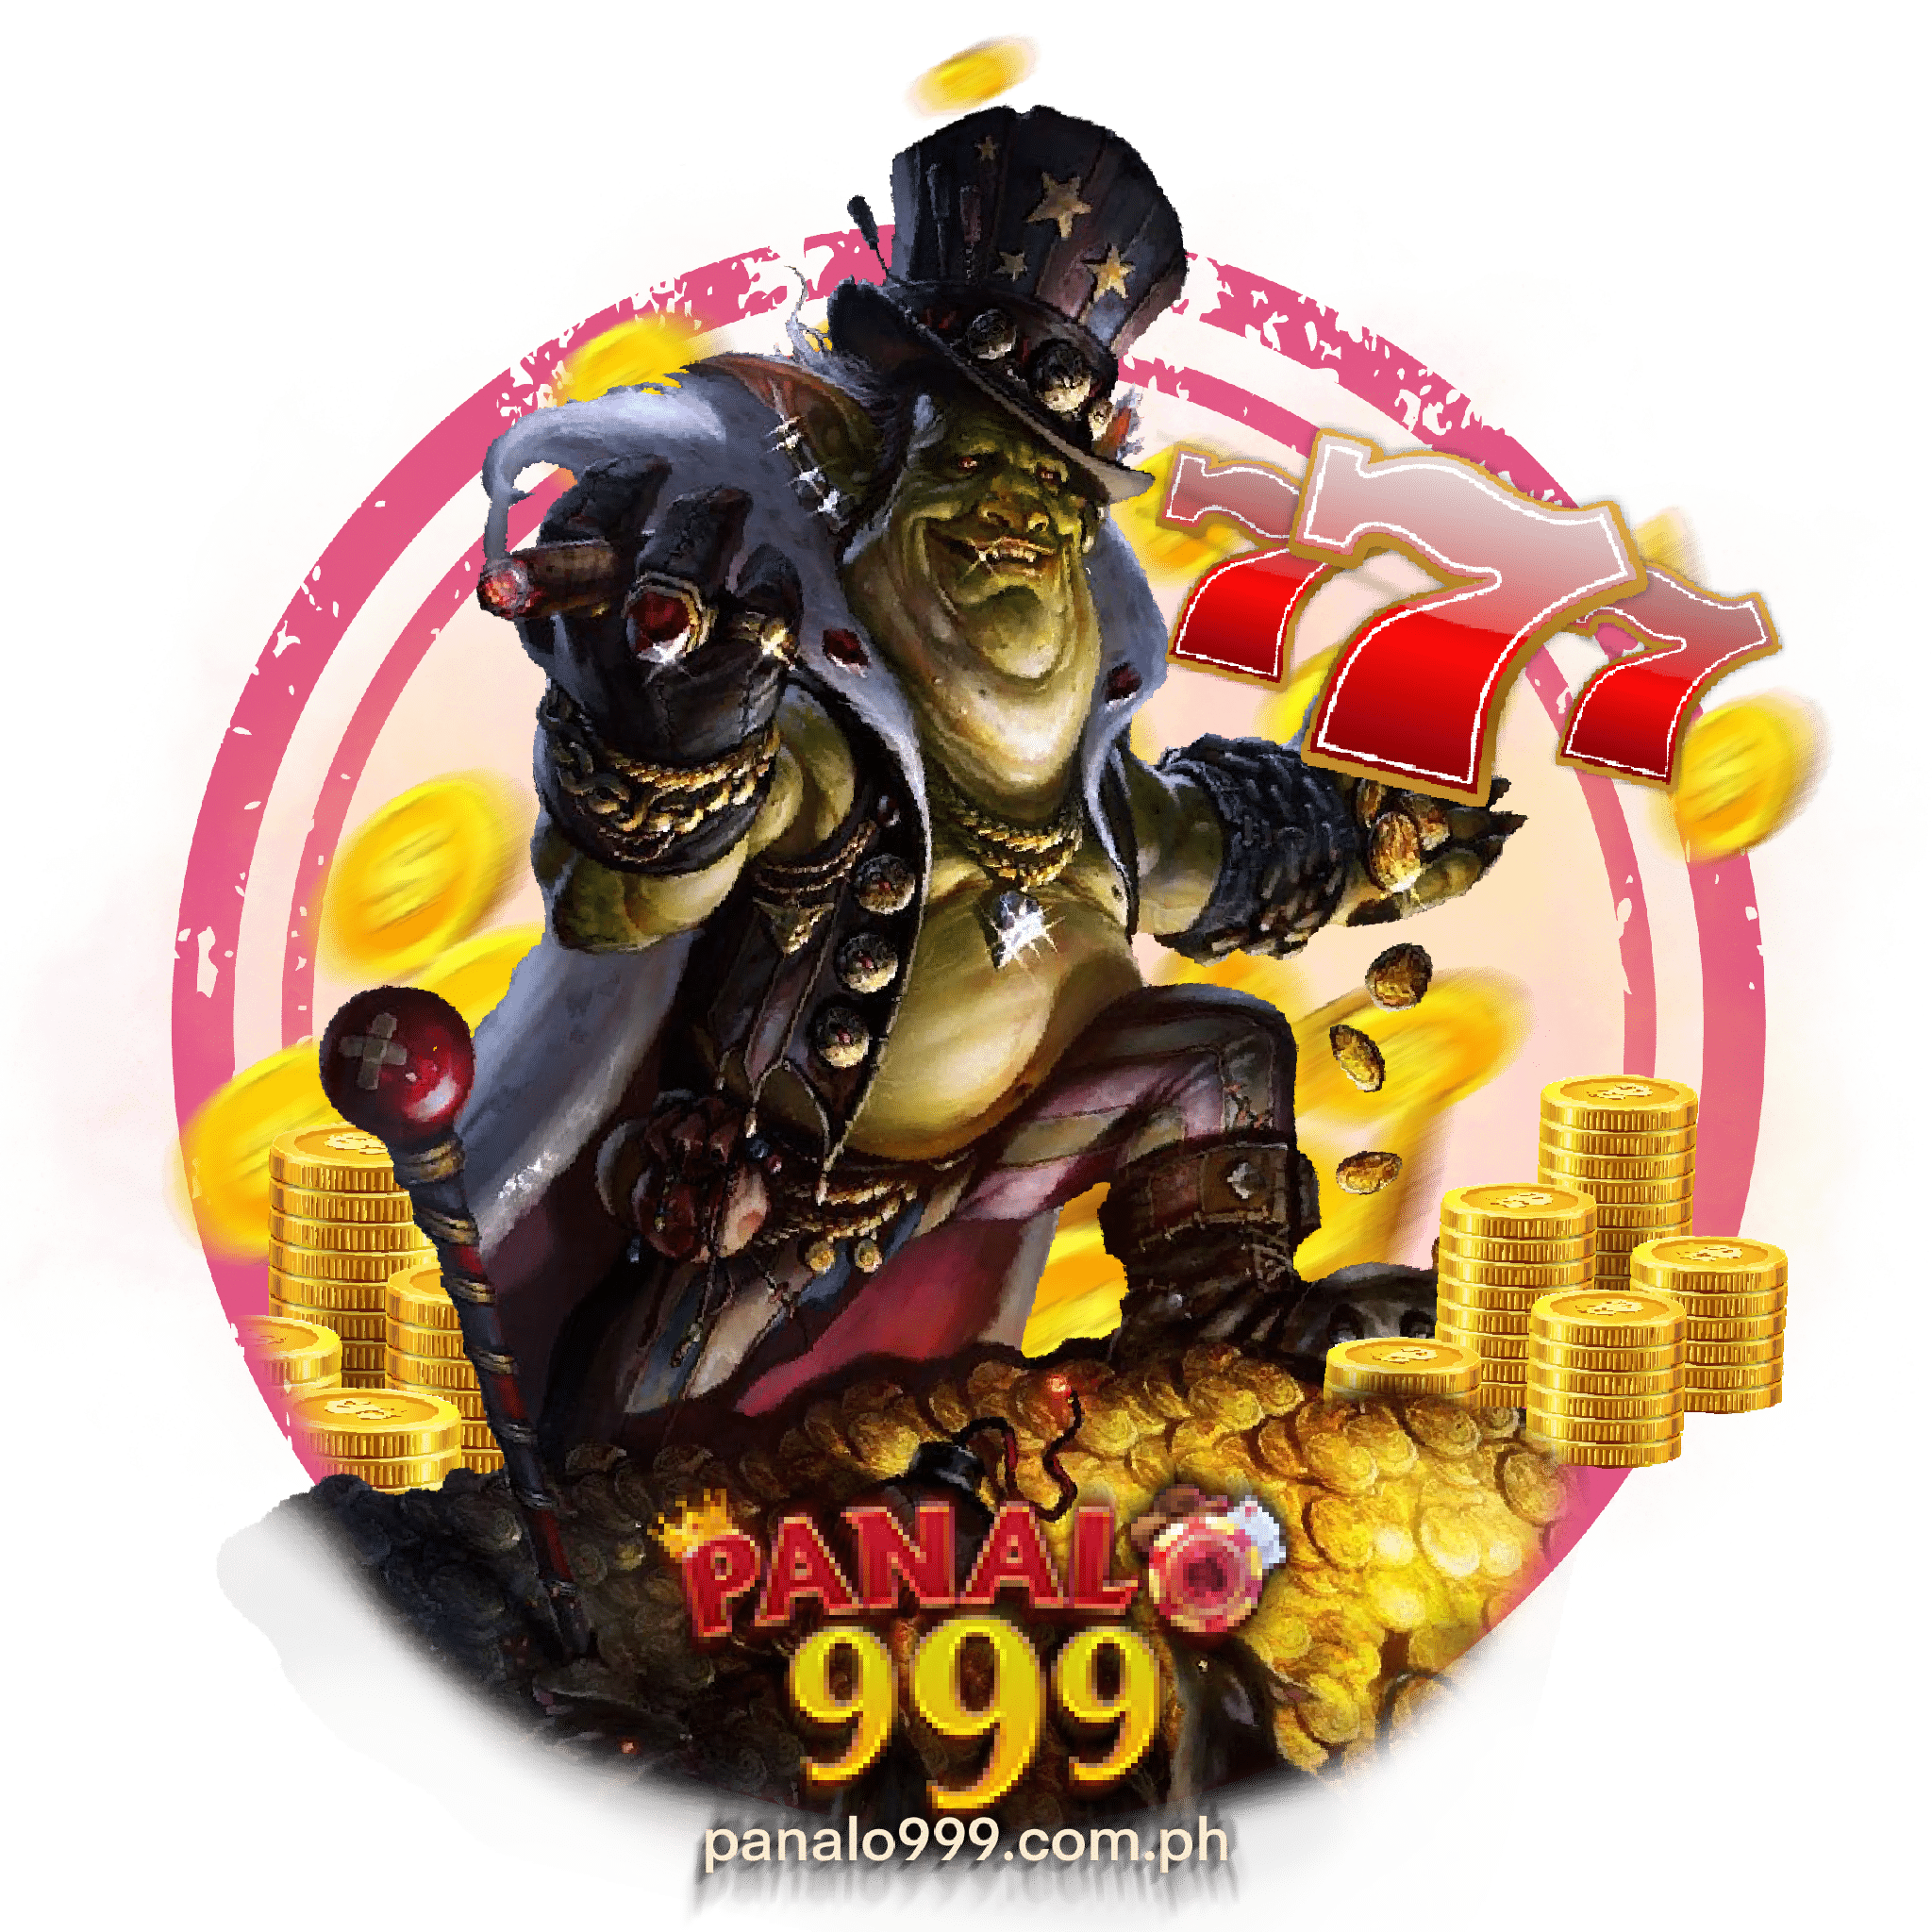 PANALO999 online casino